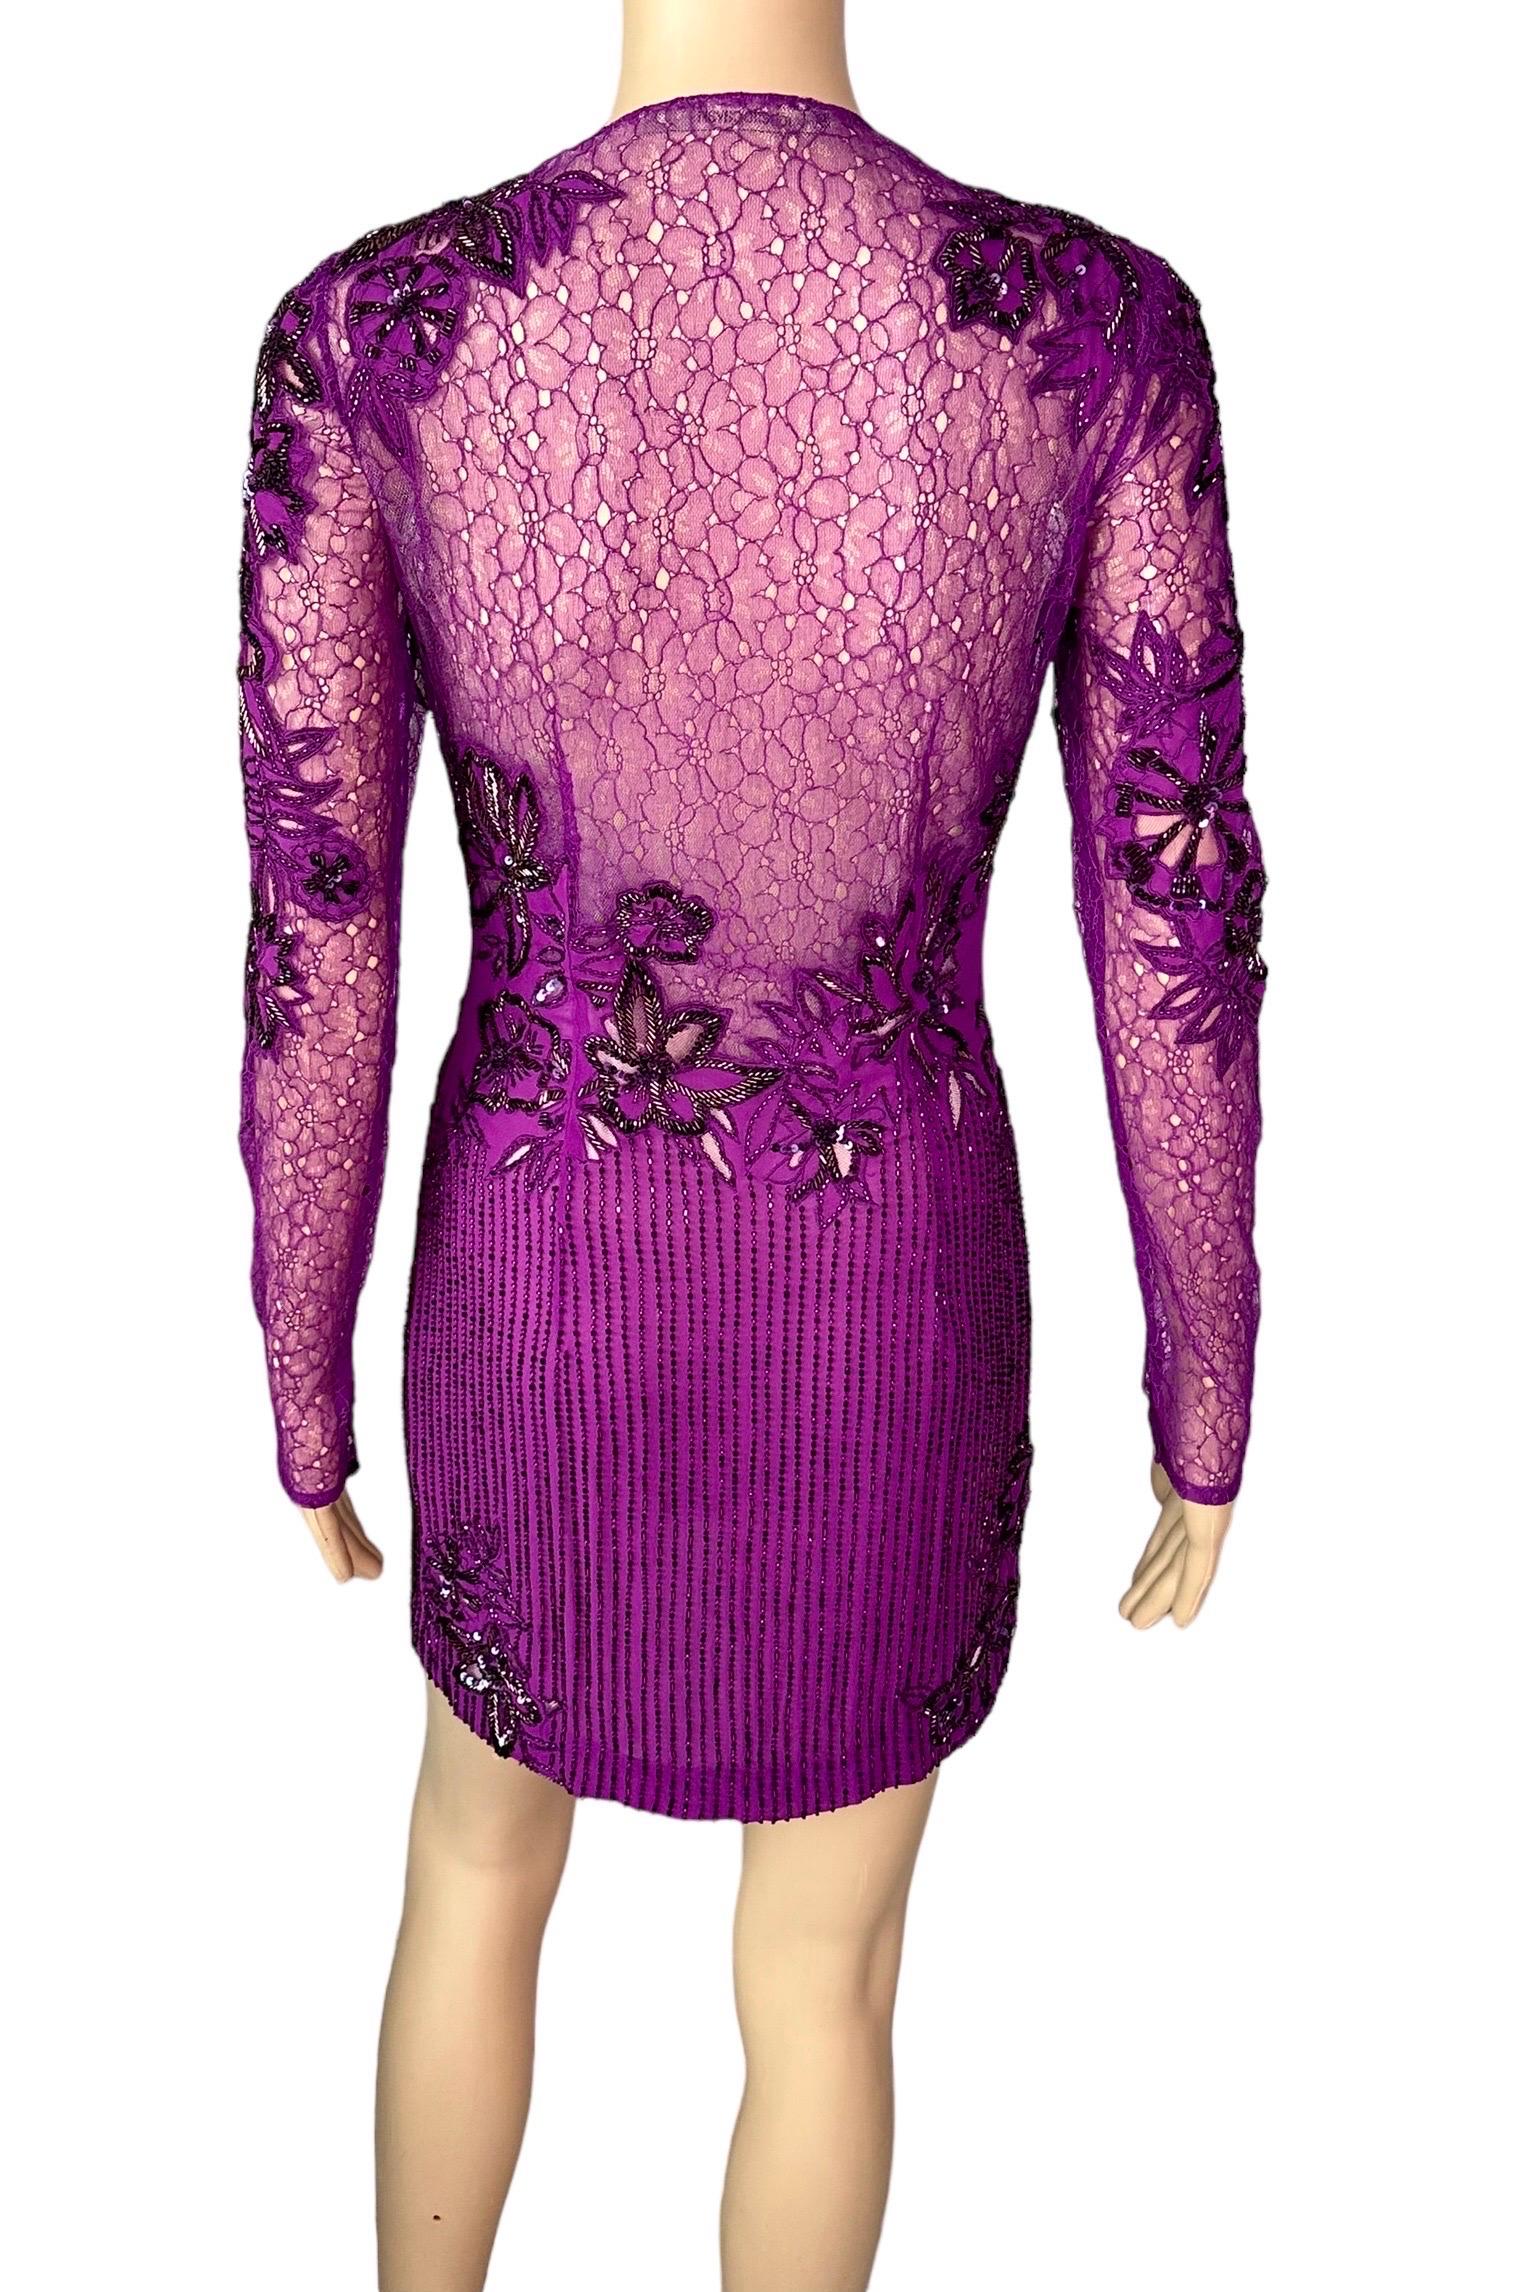 Purple Roberto Cavalli Unworn S/S 2016 Embellished Sheer Lace Mesh Mini Dress For Sale